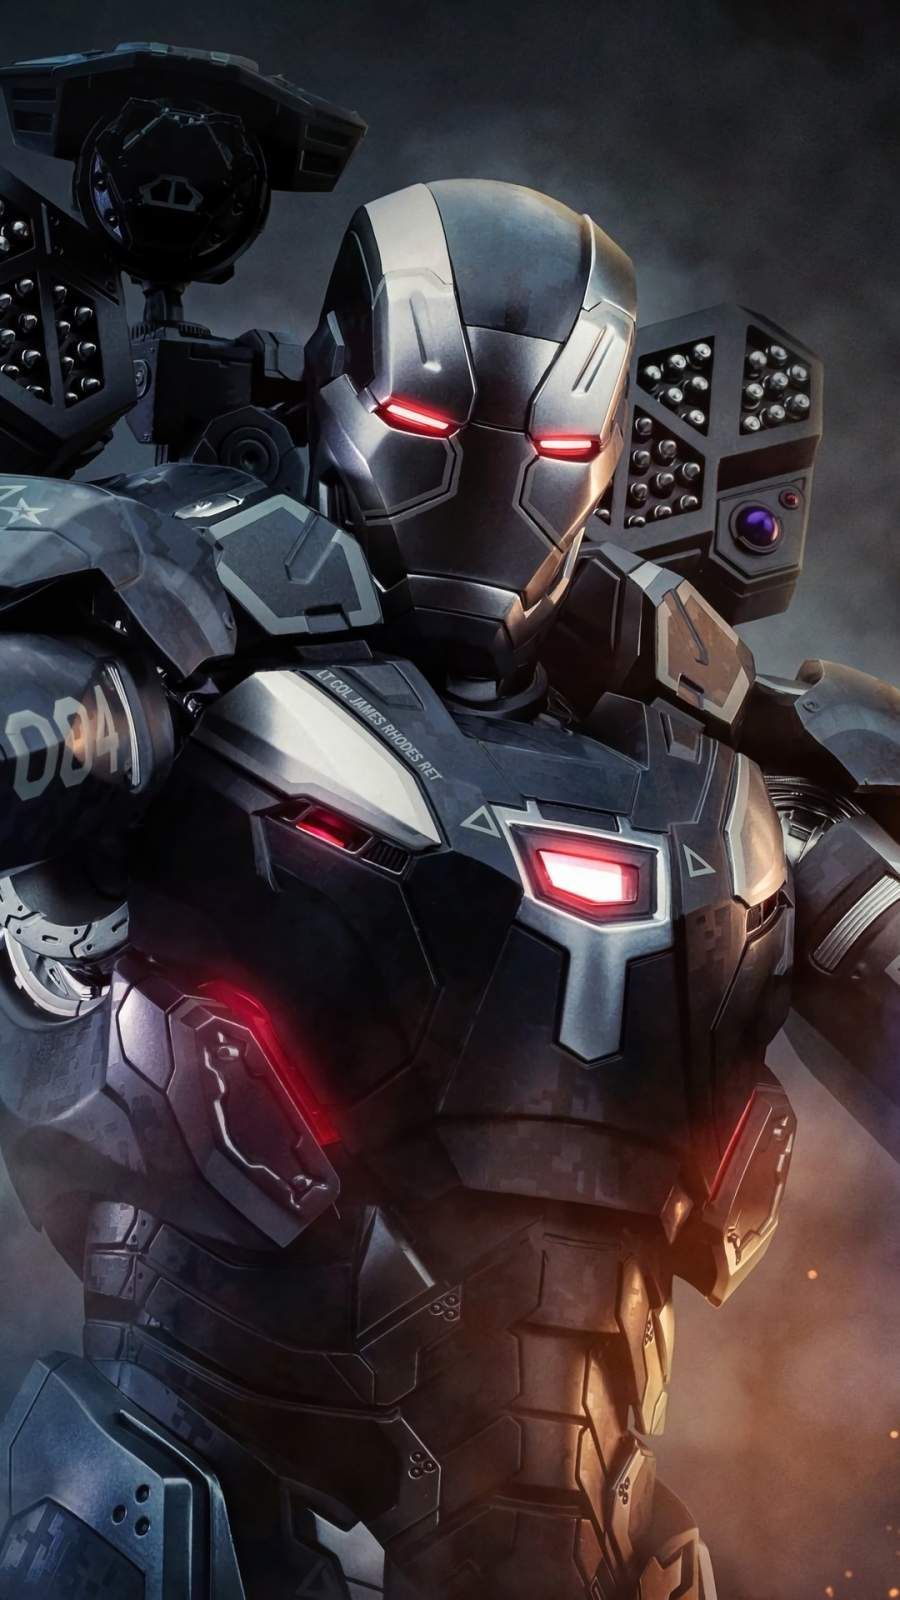 War Machine 4k iPhone Wallpaper. Marvel superhero posters, Iron man avengers, Marvel comics wallpaper